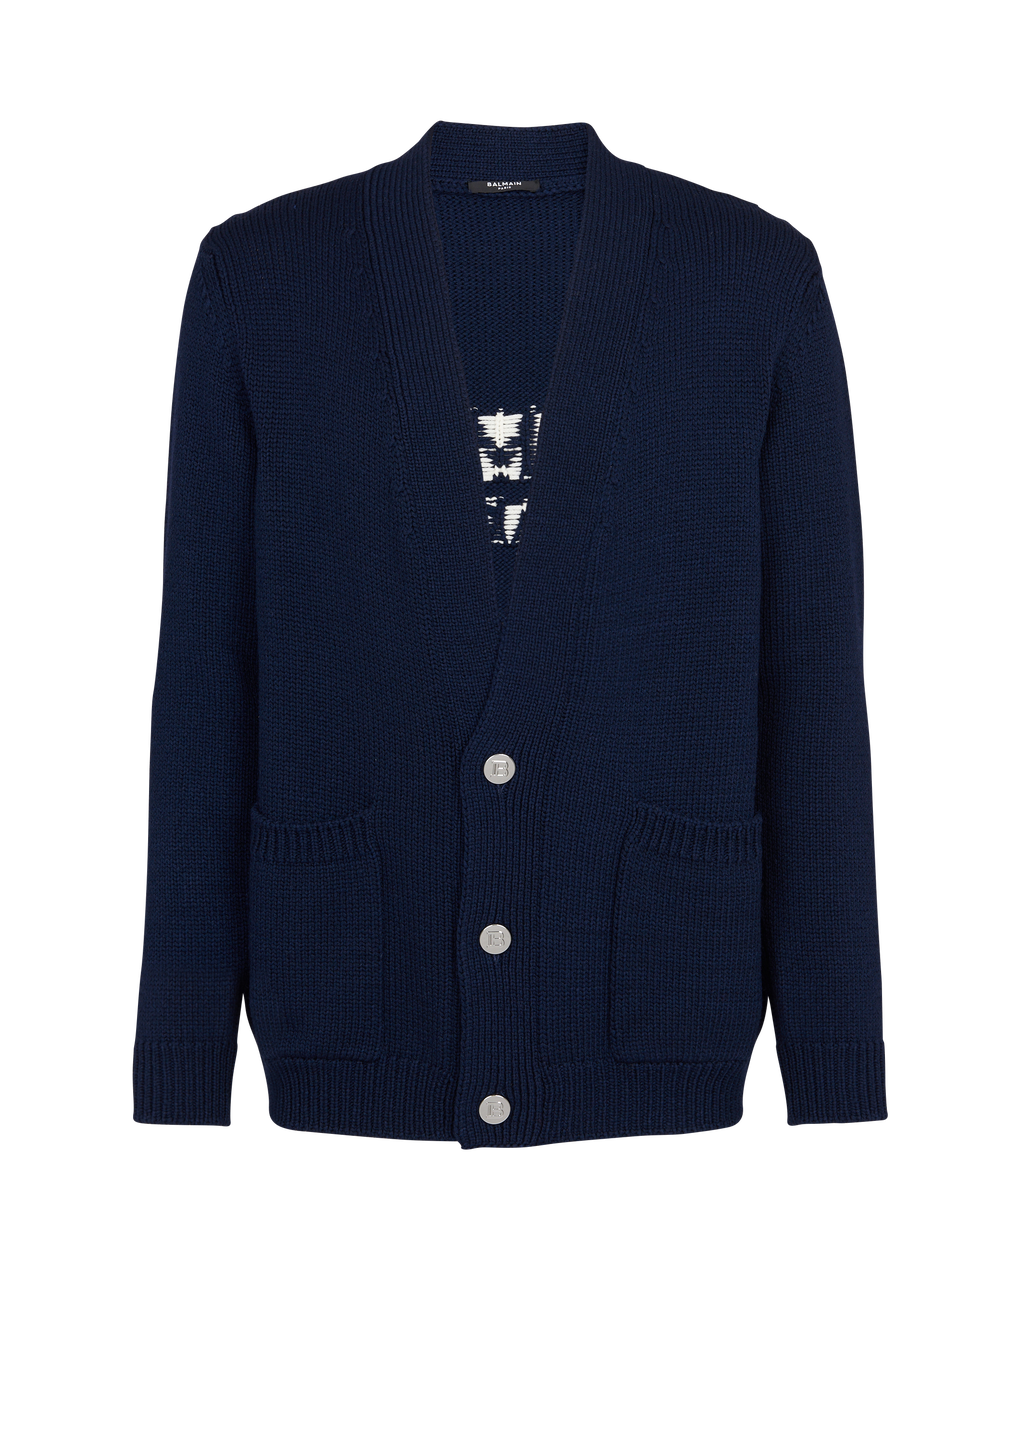 Cardigan in maglia con logo Balmain Paris, blu, hi-res